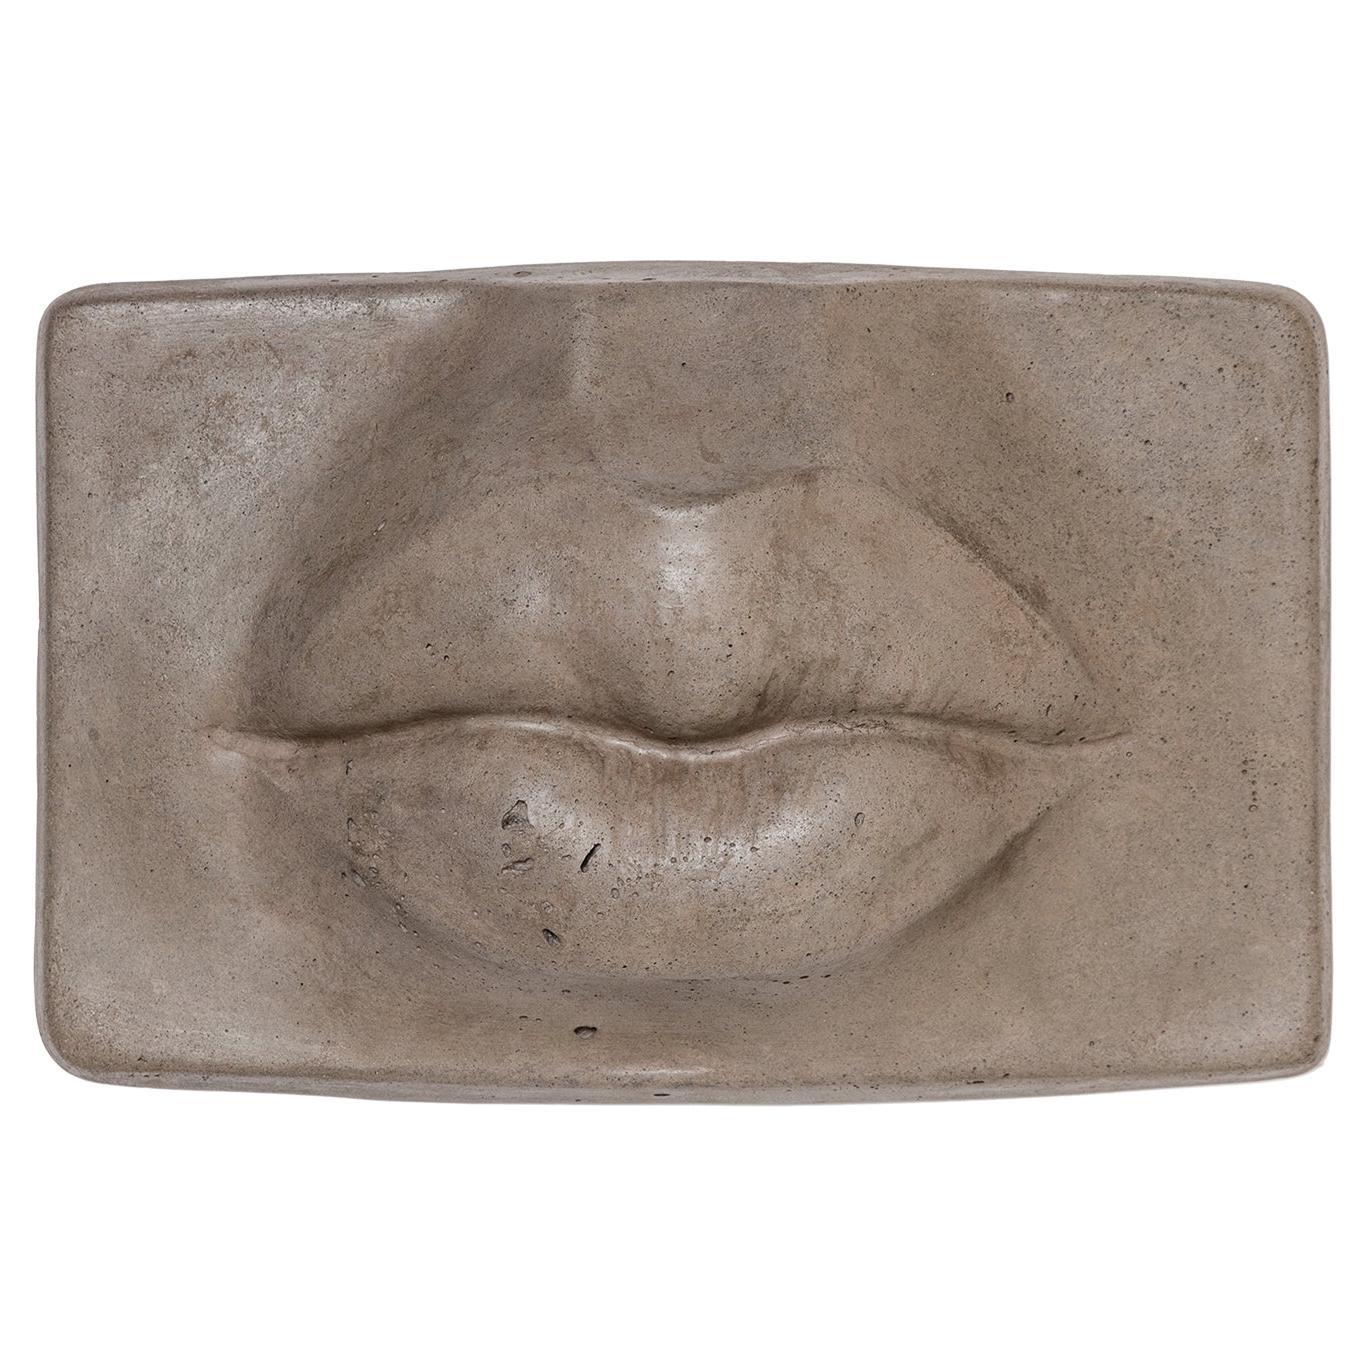 Nashira-Skulptur von Lippen